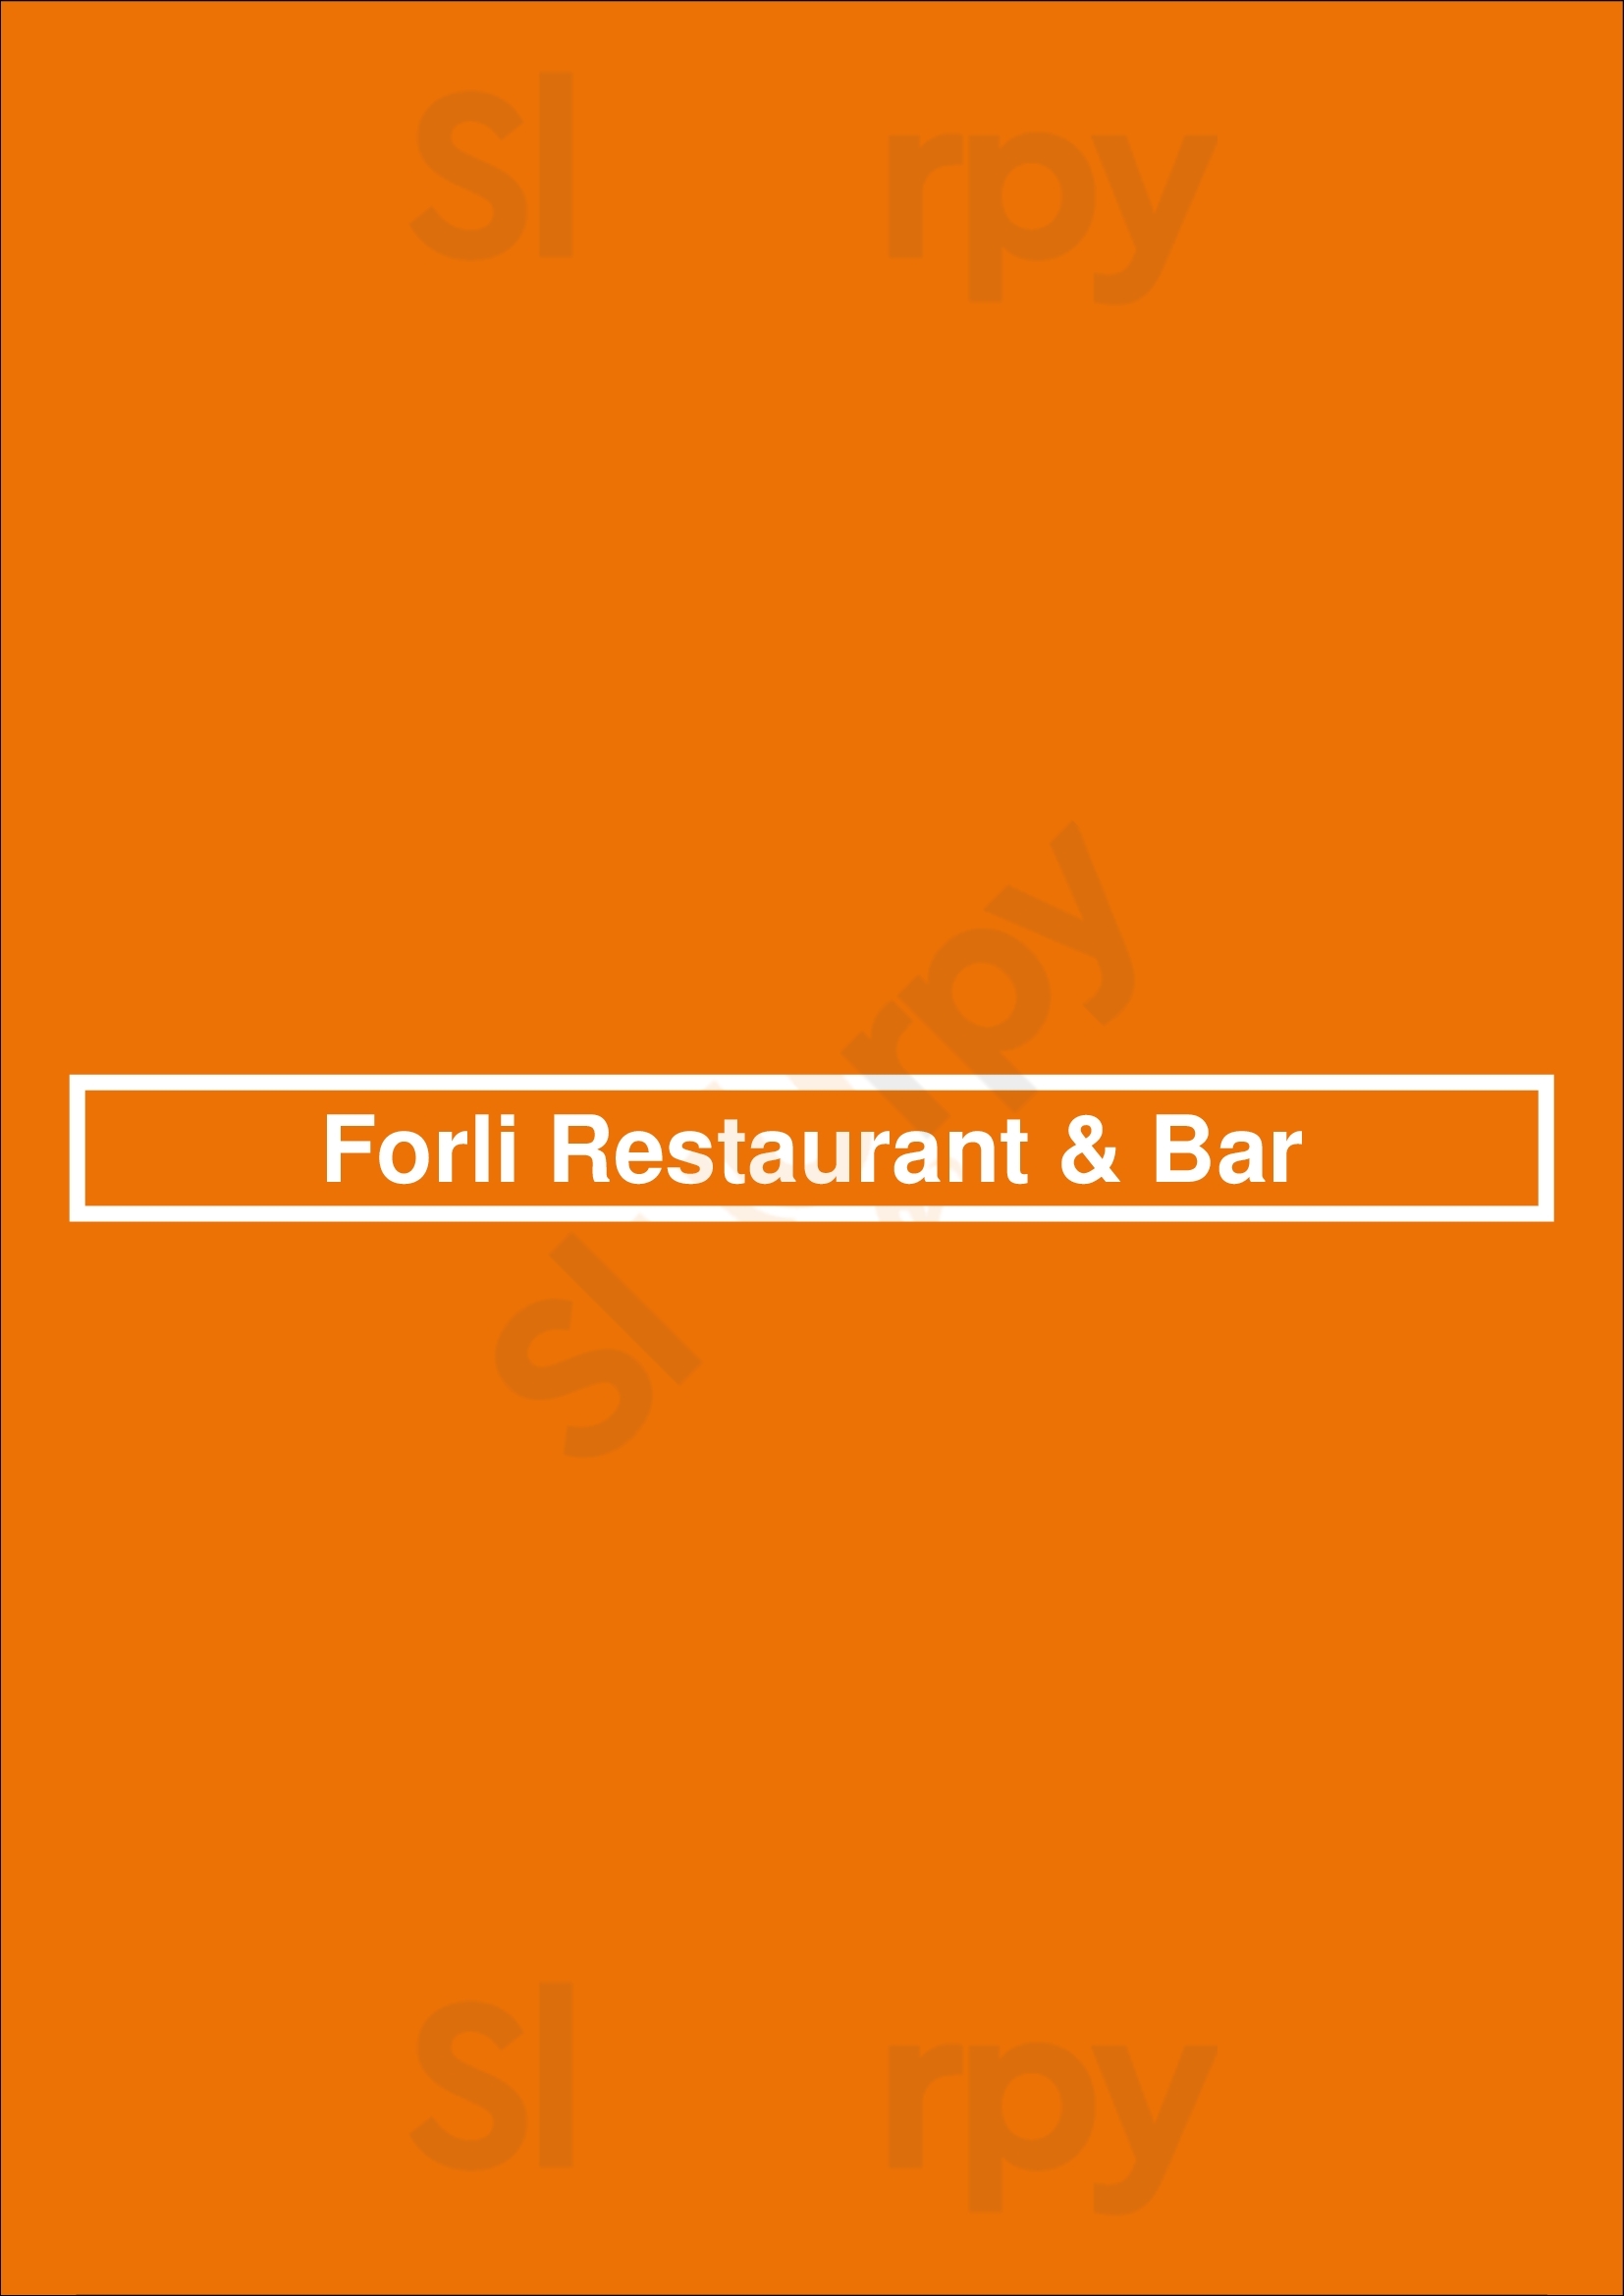 Forli Restaurant & Bar Alamo Menu - 1